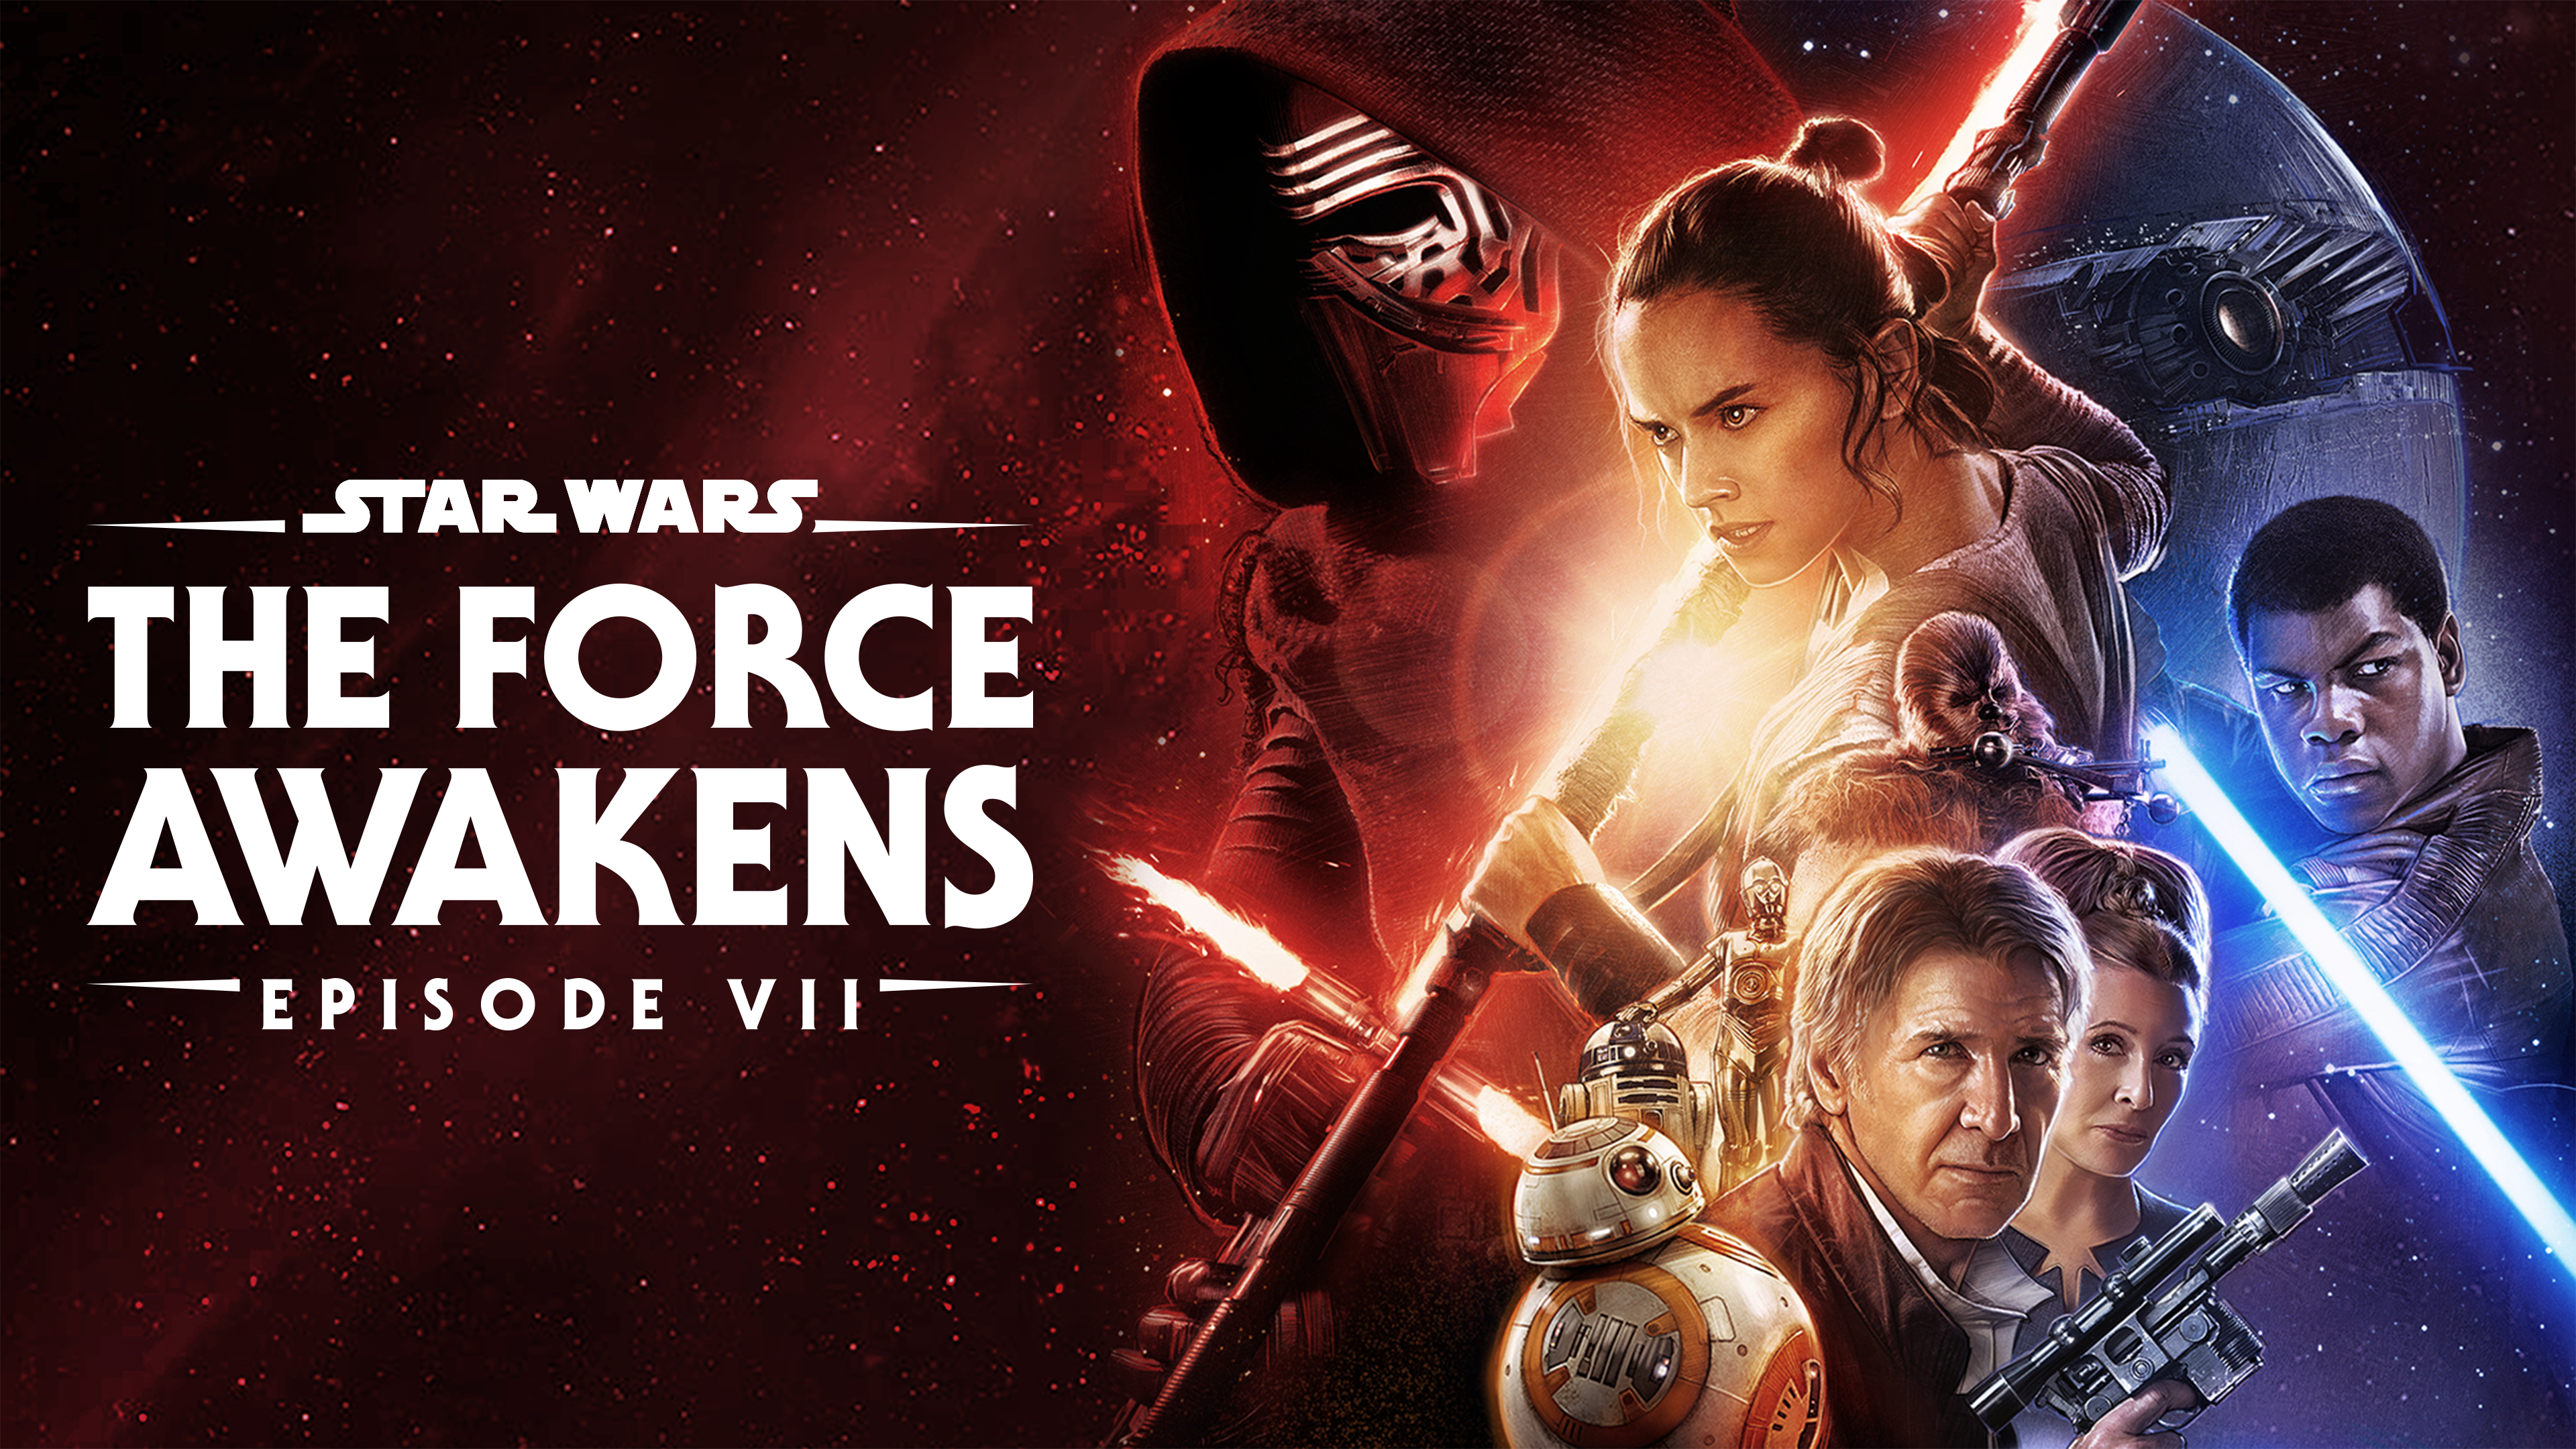 3840x2160 Star Wars Episode VII: The Force Awakens 4k Ultra HD Wallpaper